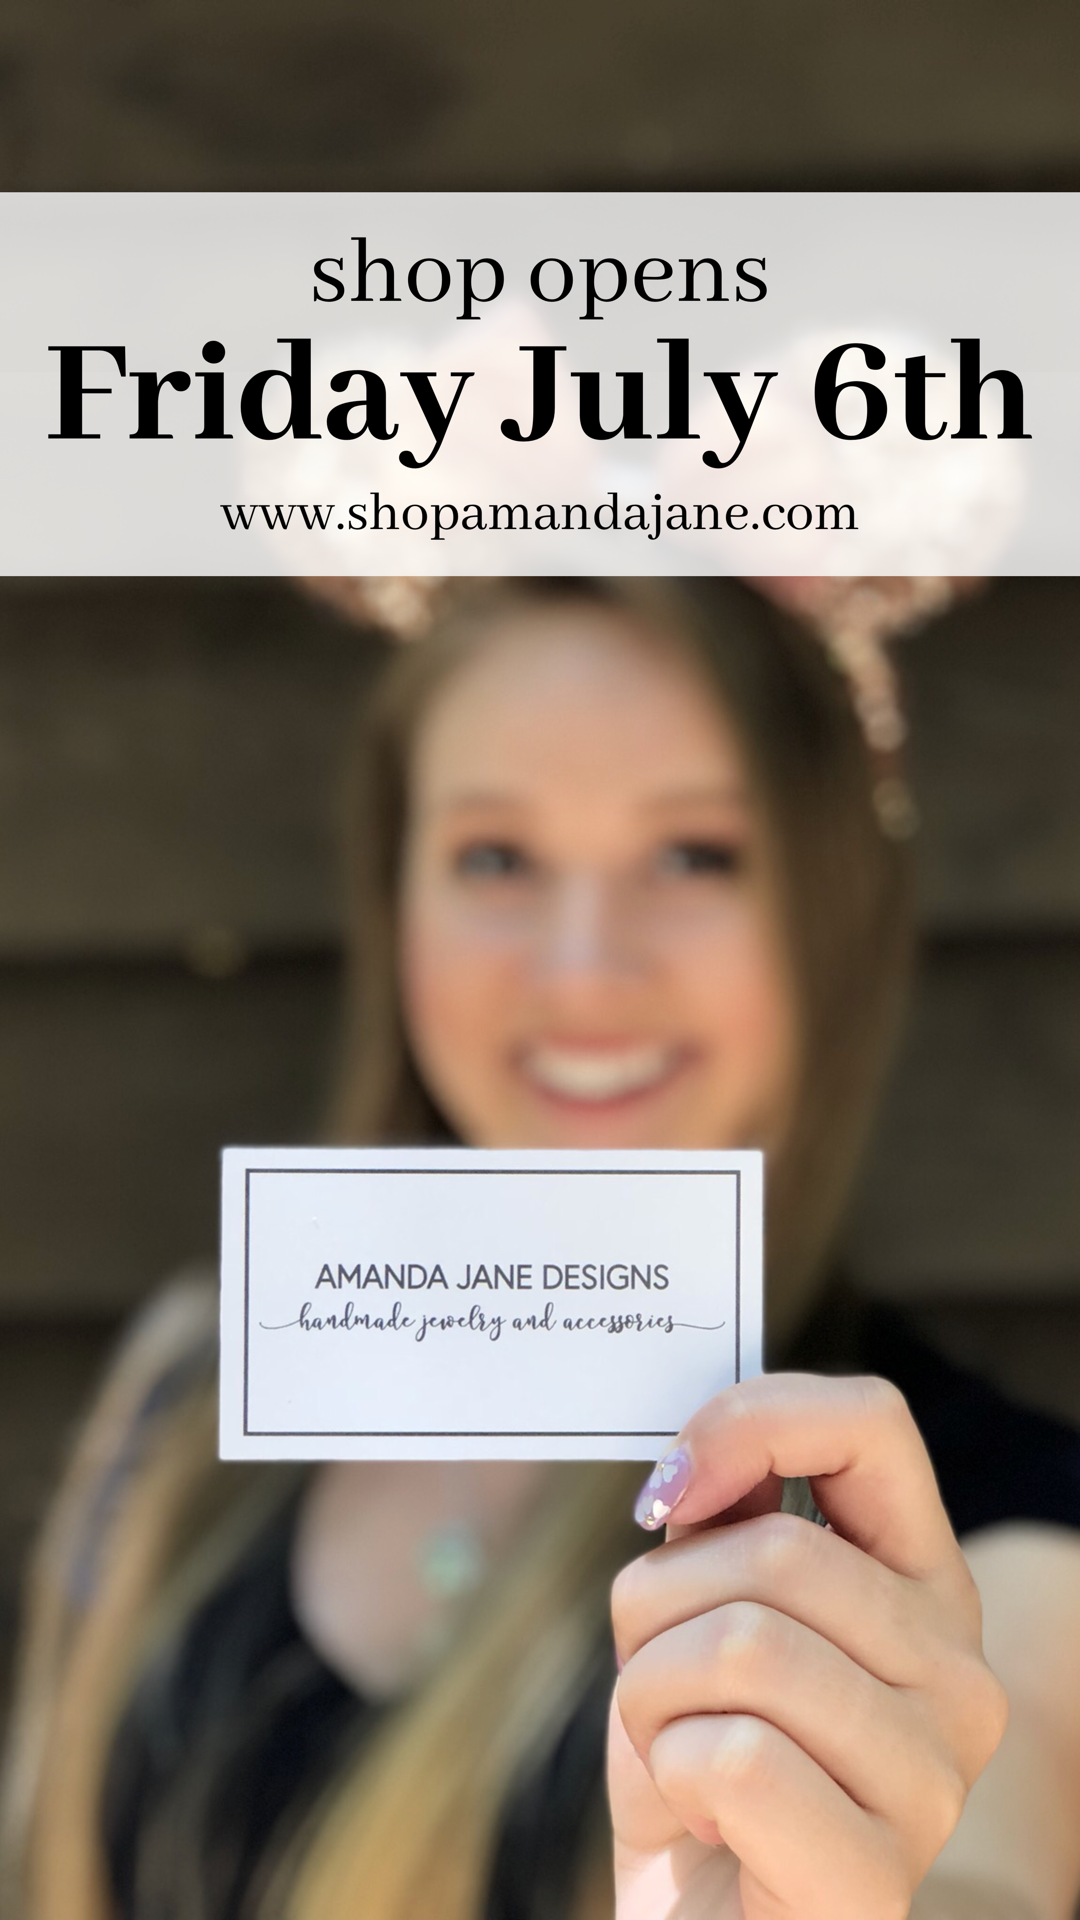 Amanda Jane Designs Re-Opens on Friday July 6!